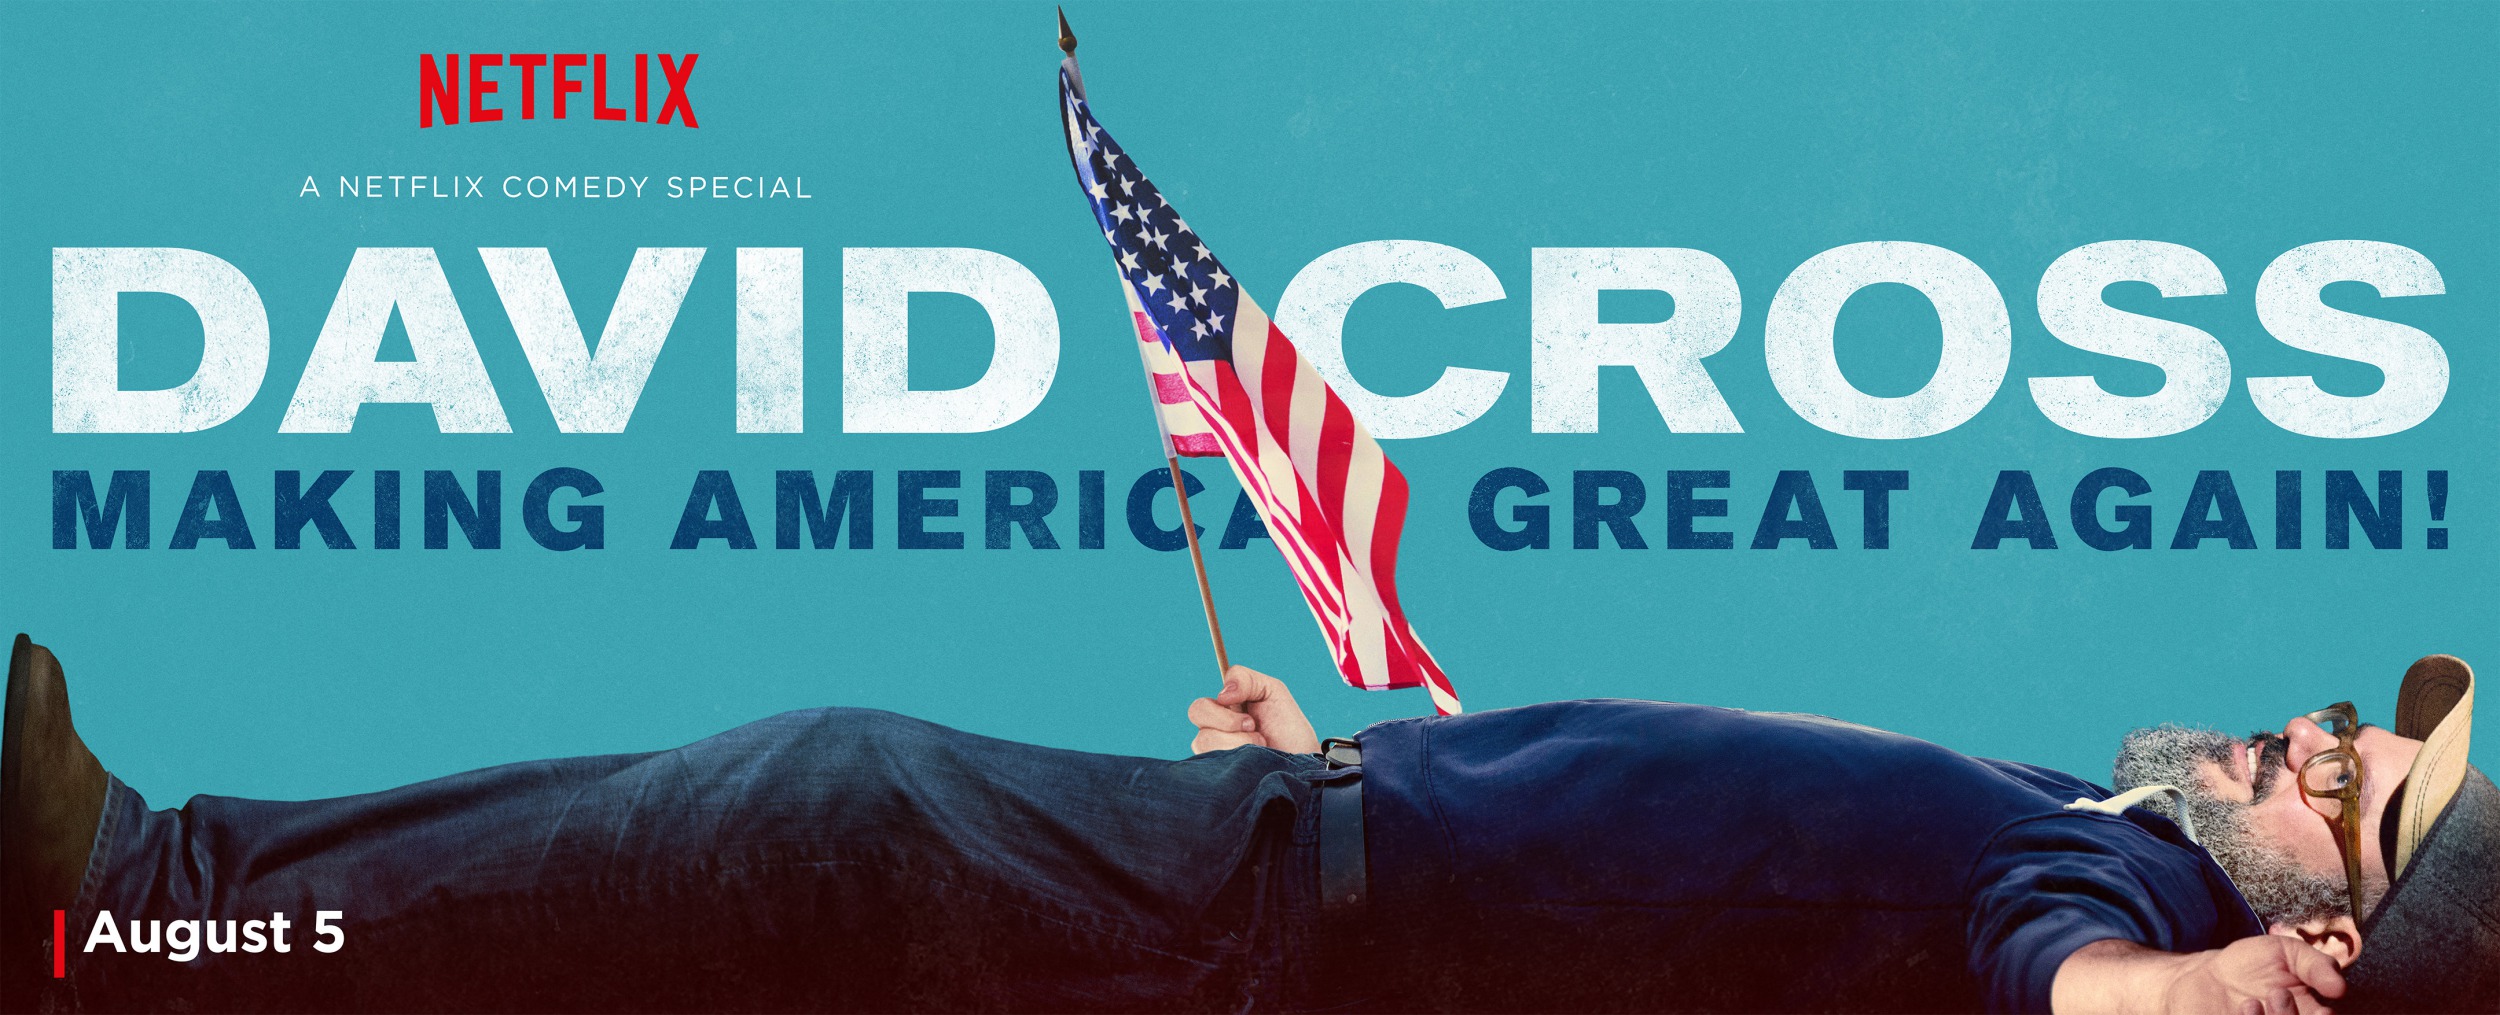 Mega Sized TV Poster Image for David Cross: Making America Great Again 